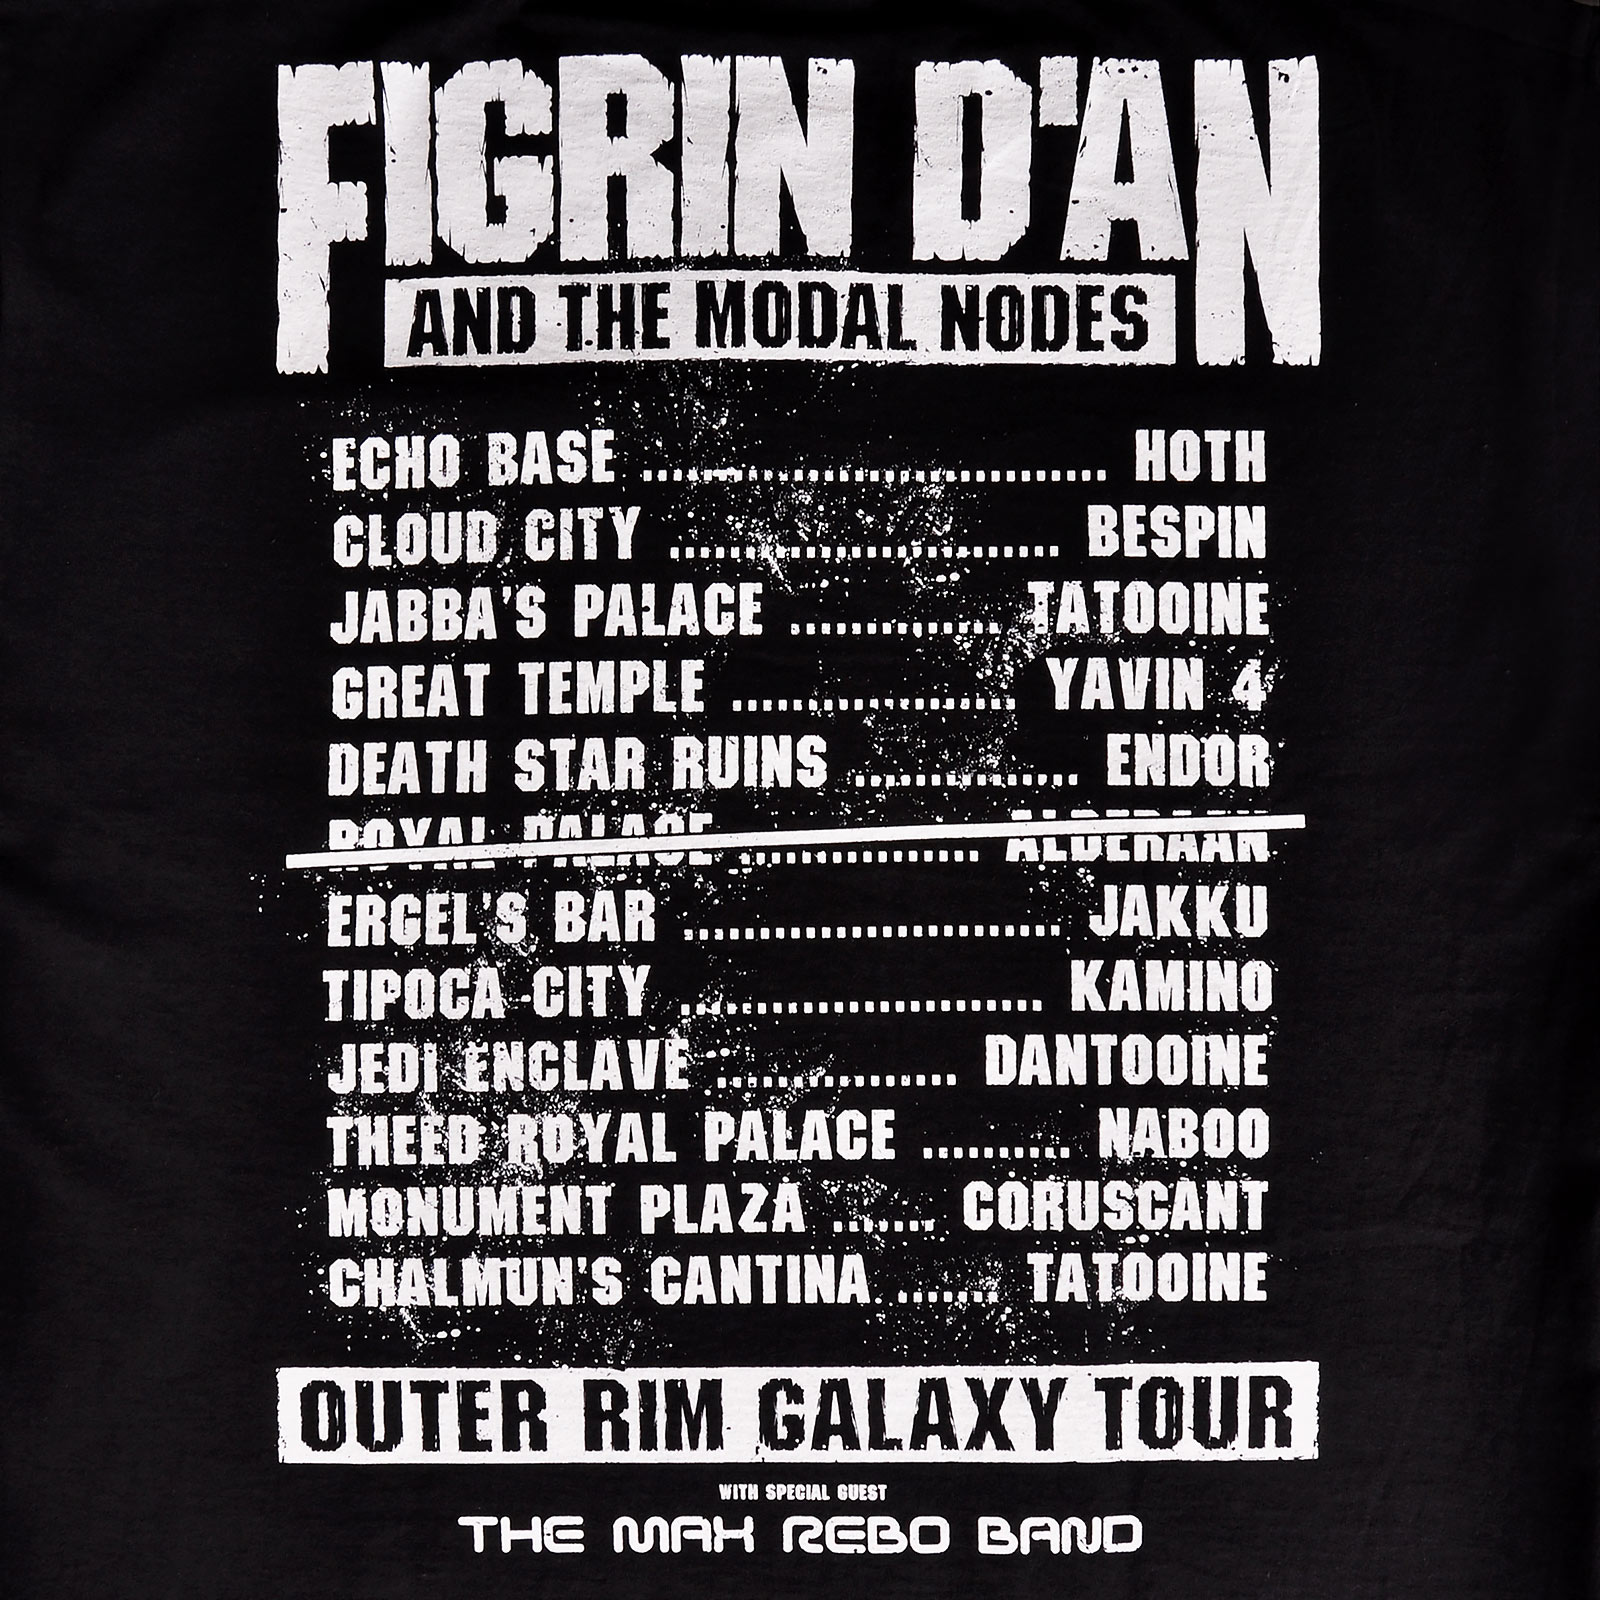 Cantina Band Outer Rim Galaxy Tour T-Shirt - Star Wars